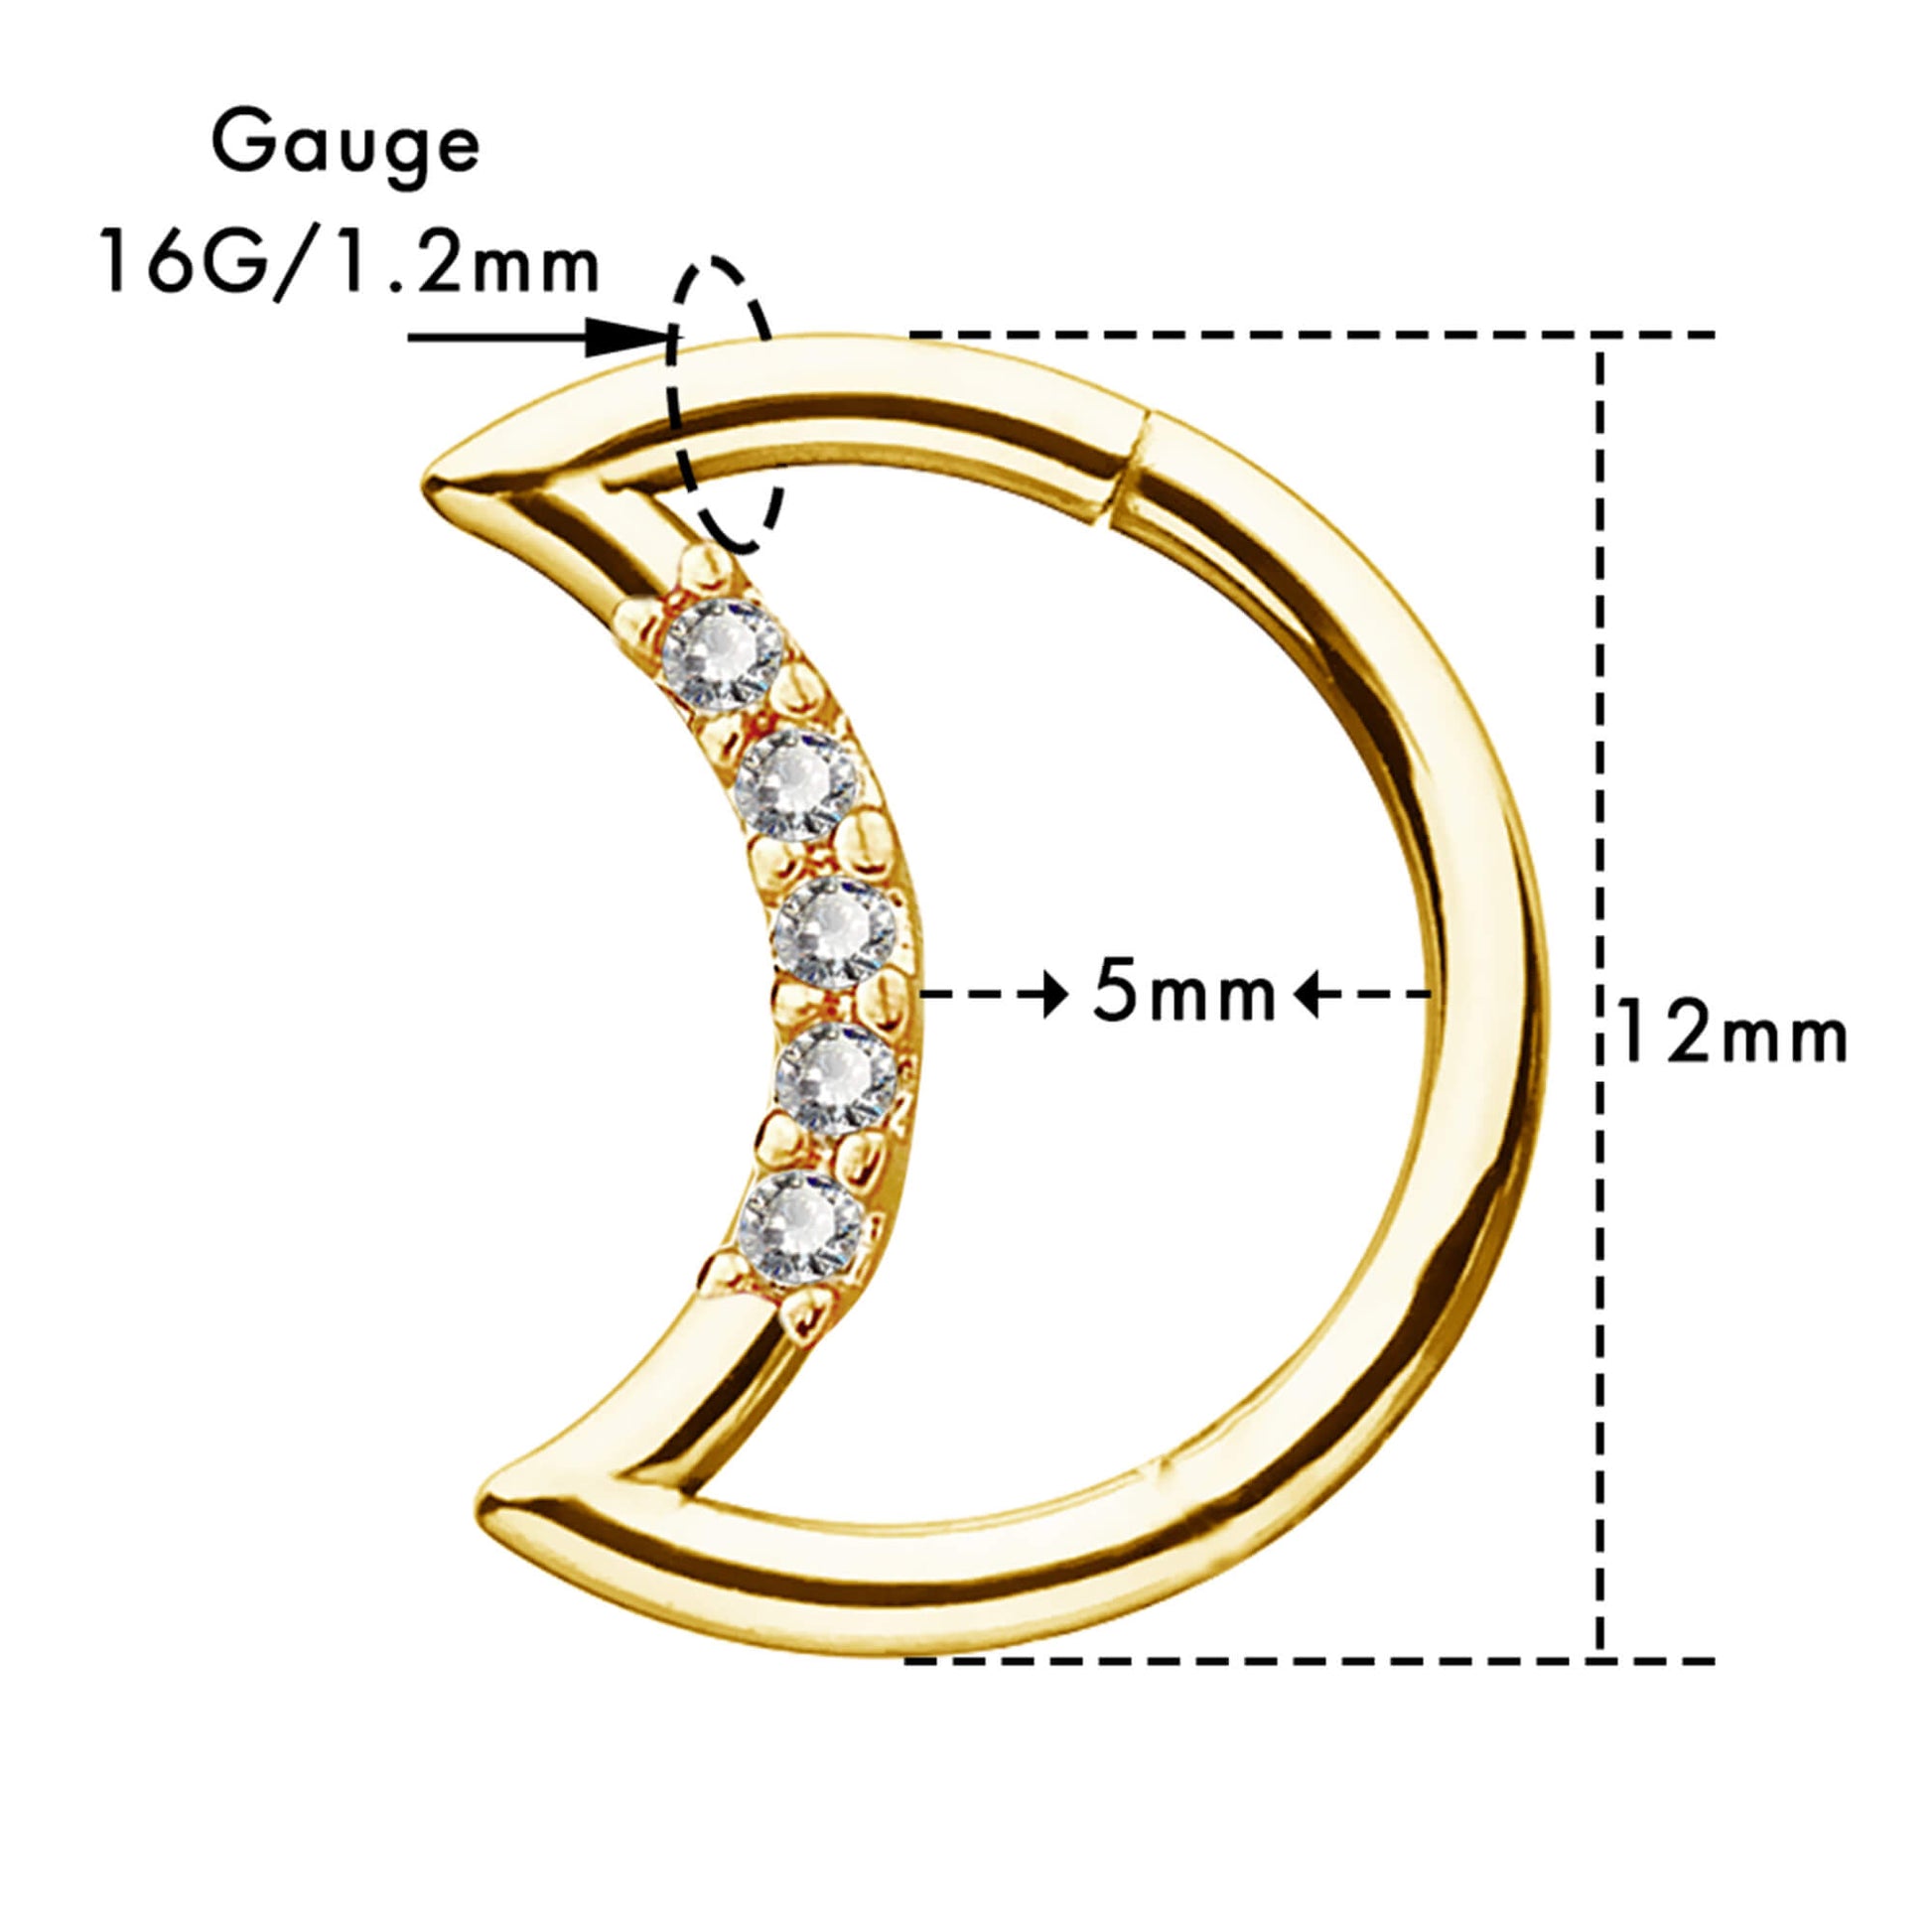 16g gold daith earring